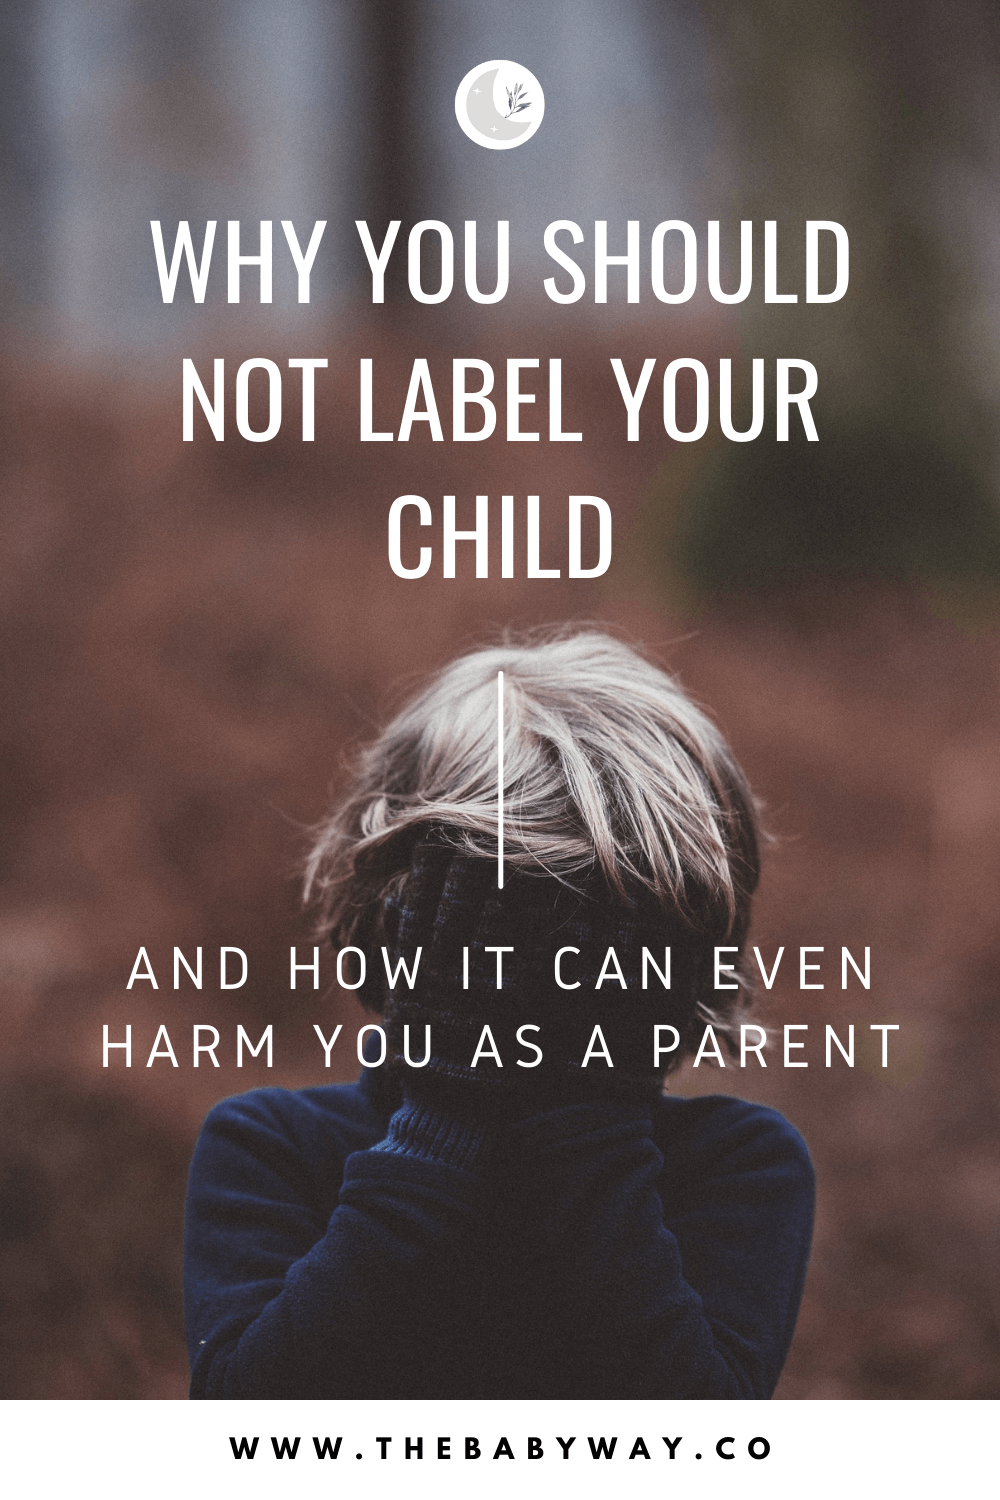 labeling children is harmful